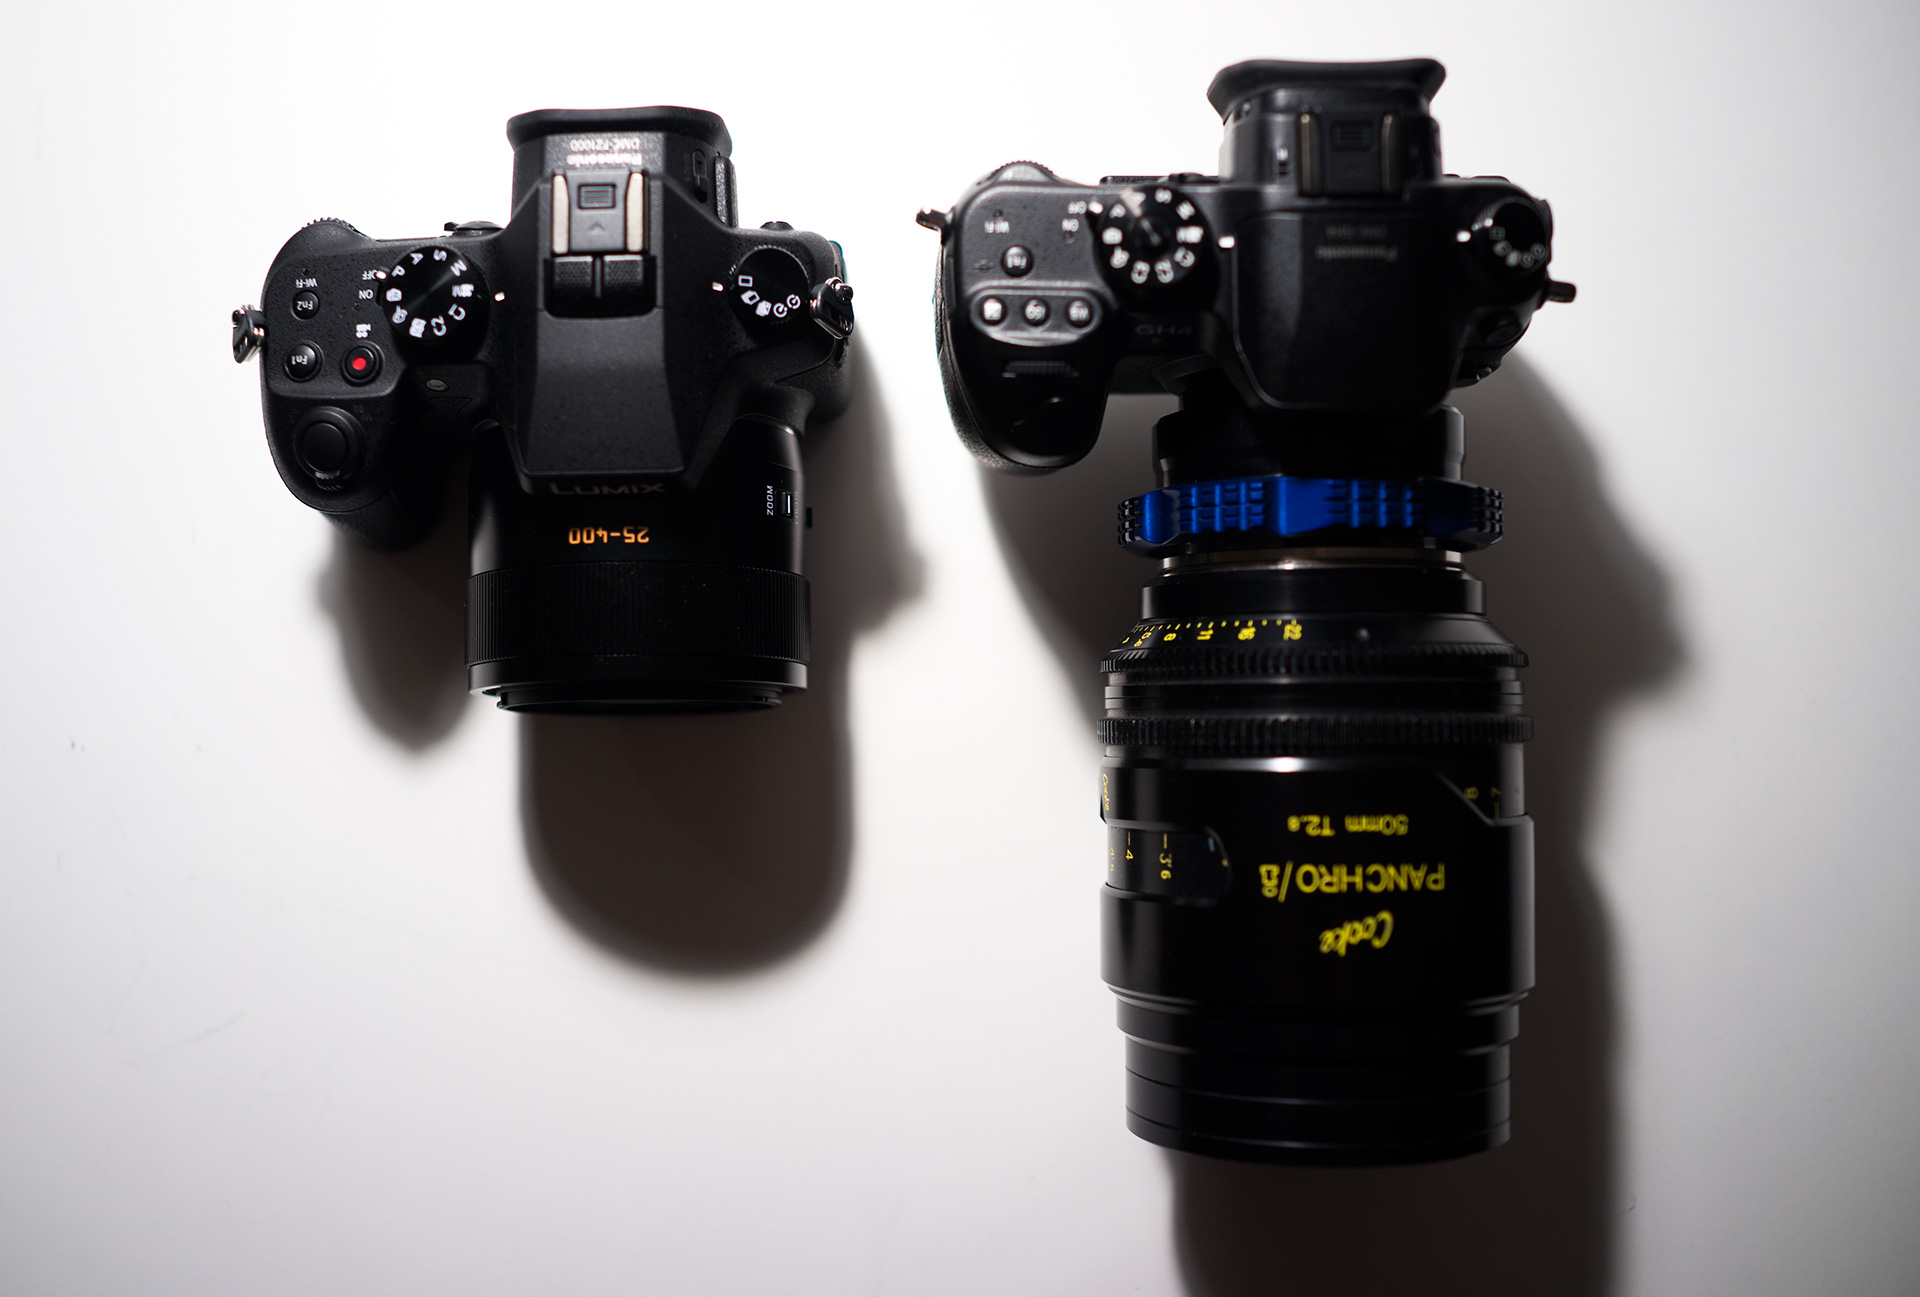 Panasonic Fz1000 Review The Bargain 4k Super Zoom Eoshd Com Filmmaking Gear And Camera Reviews